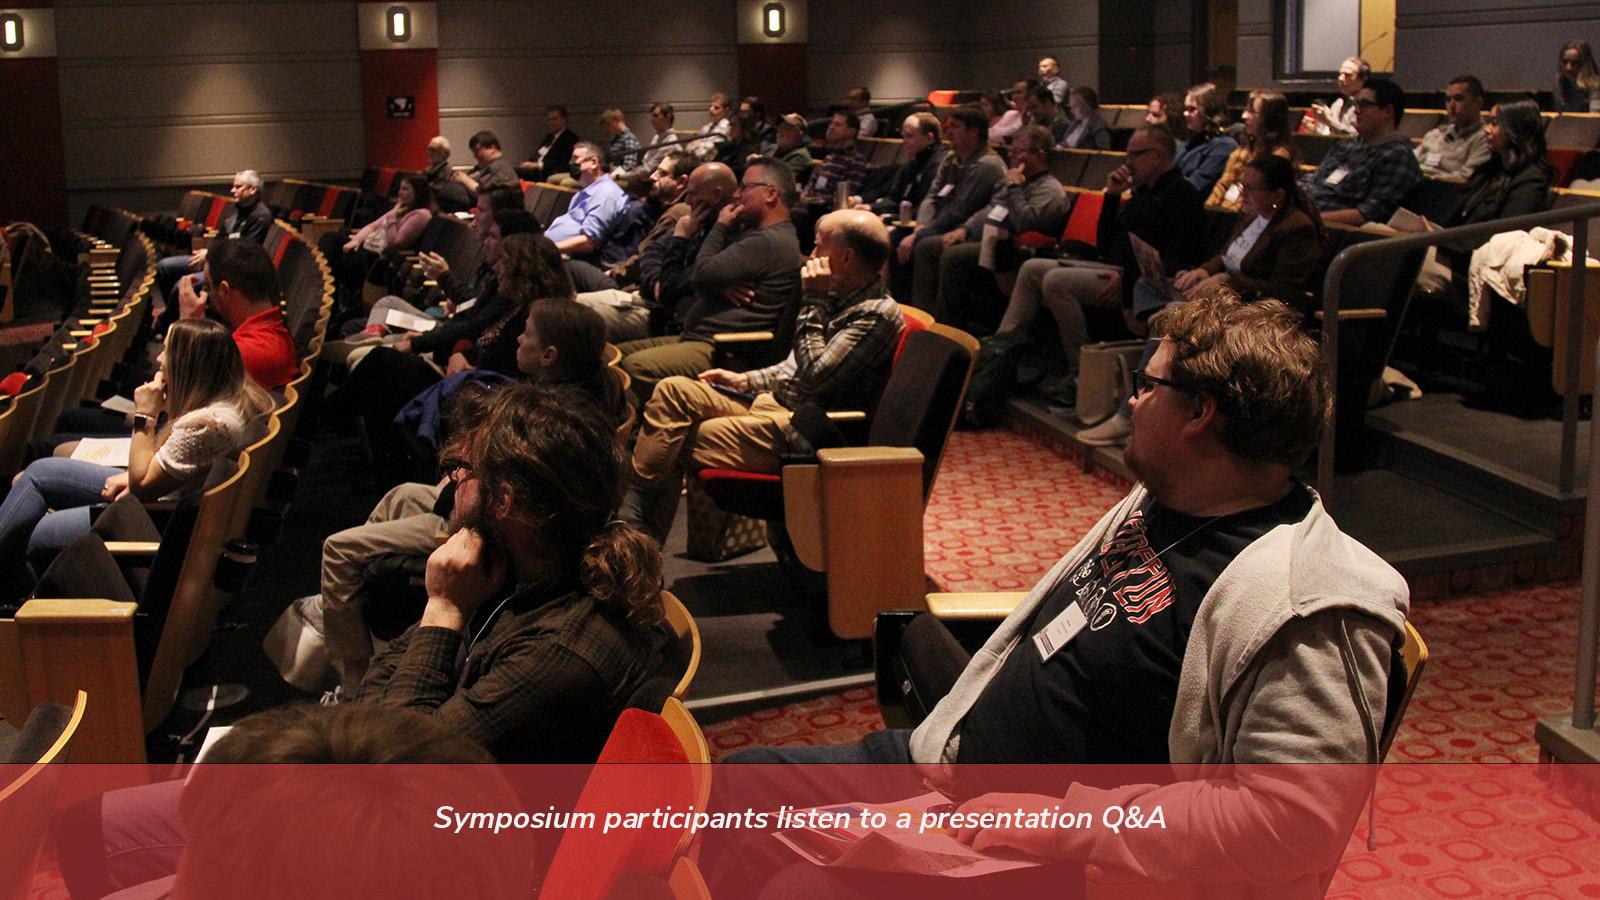 Symposium participants listen to a presentation Q&A